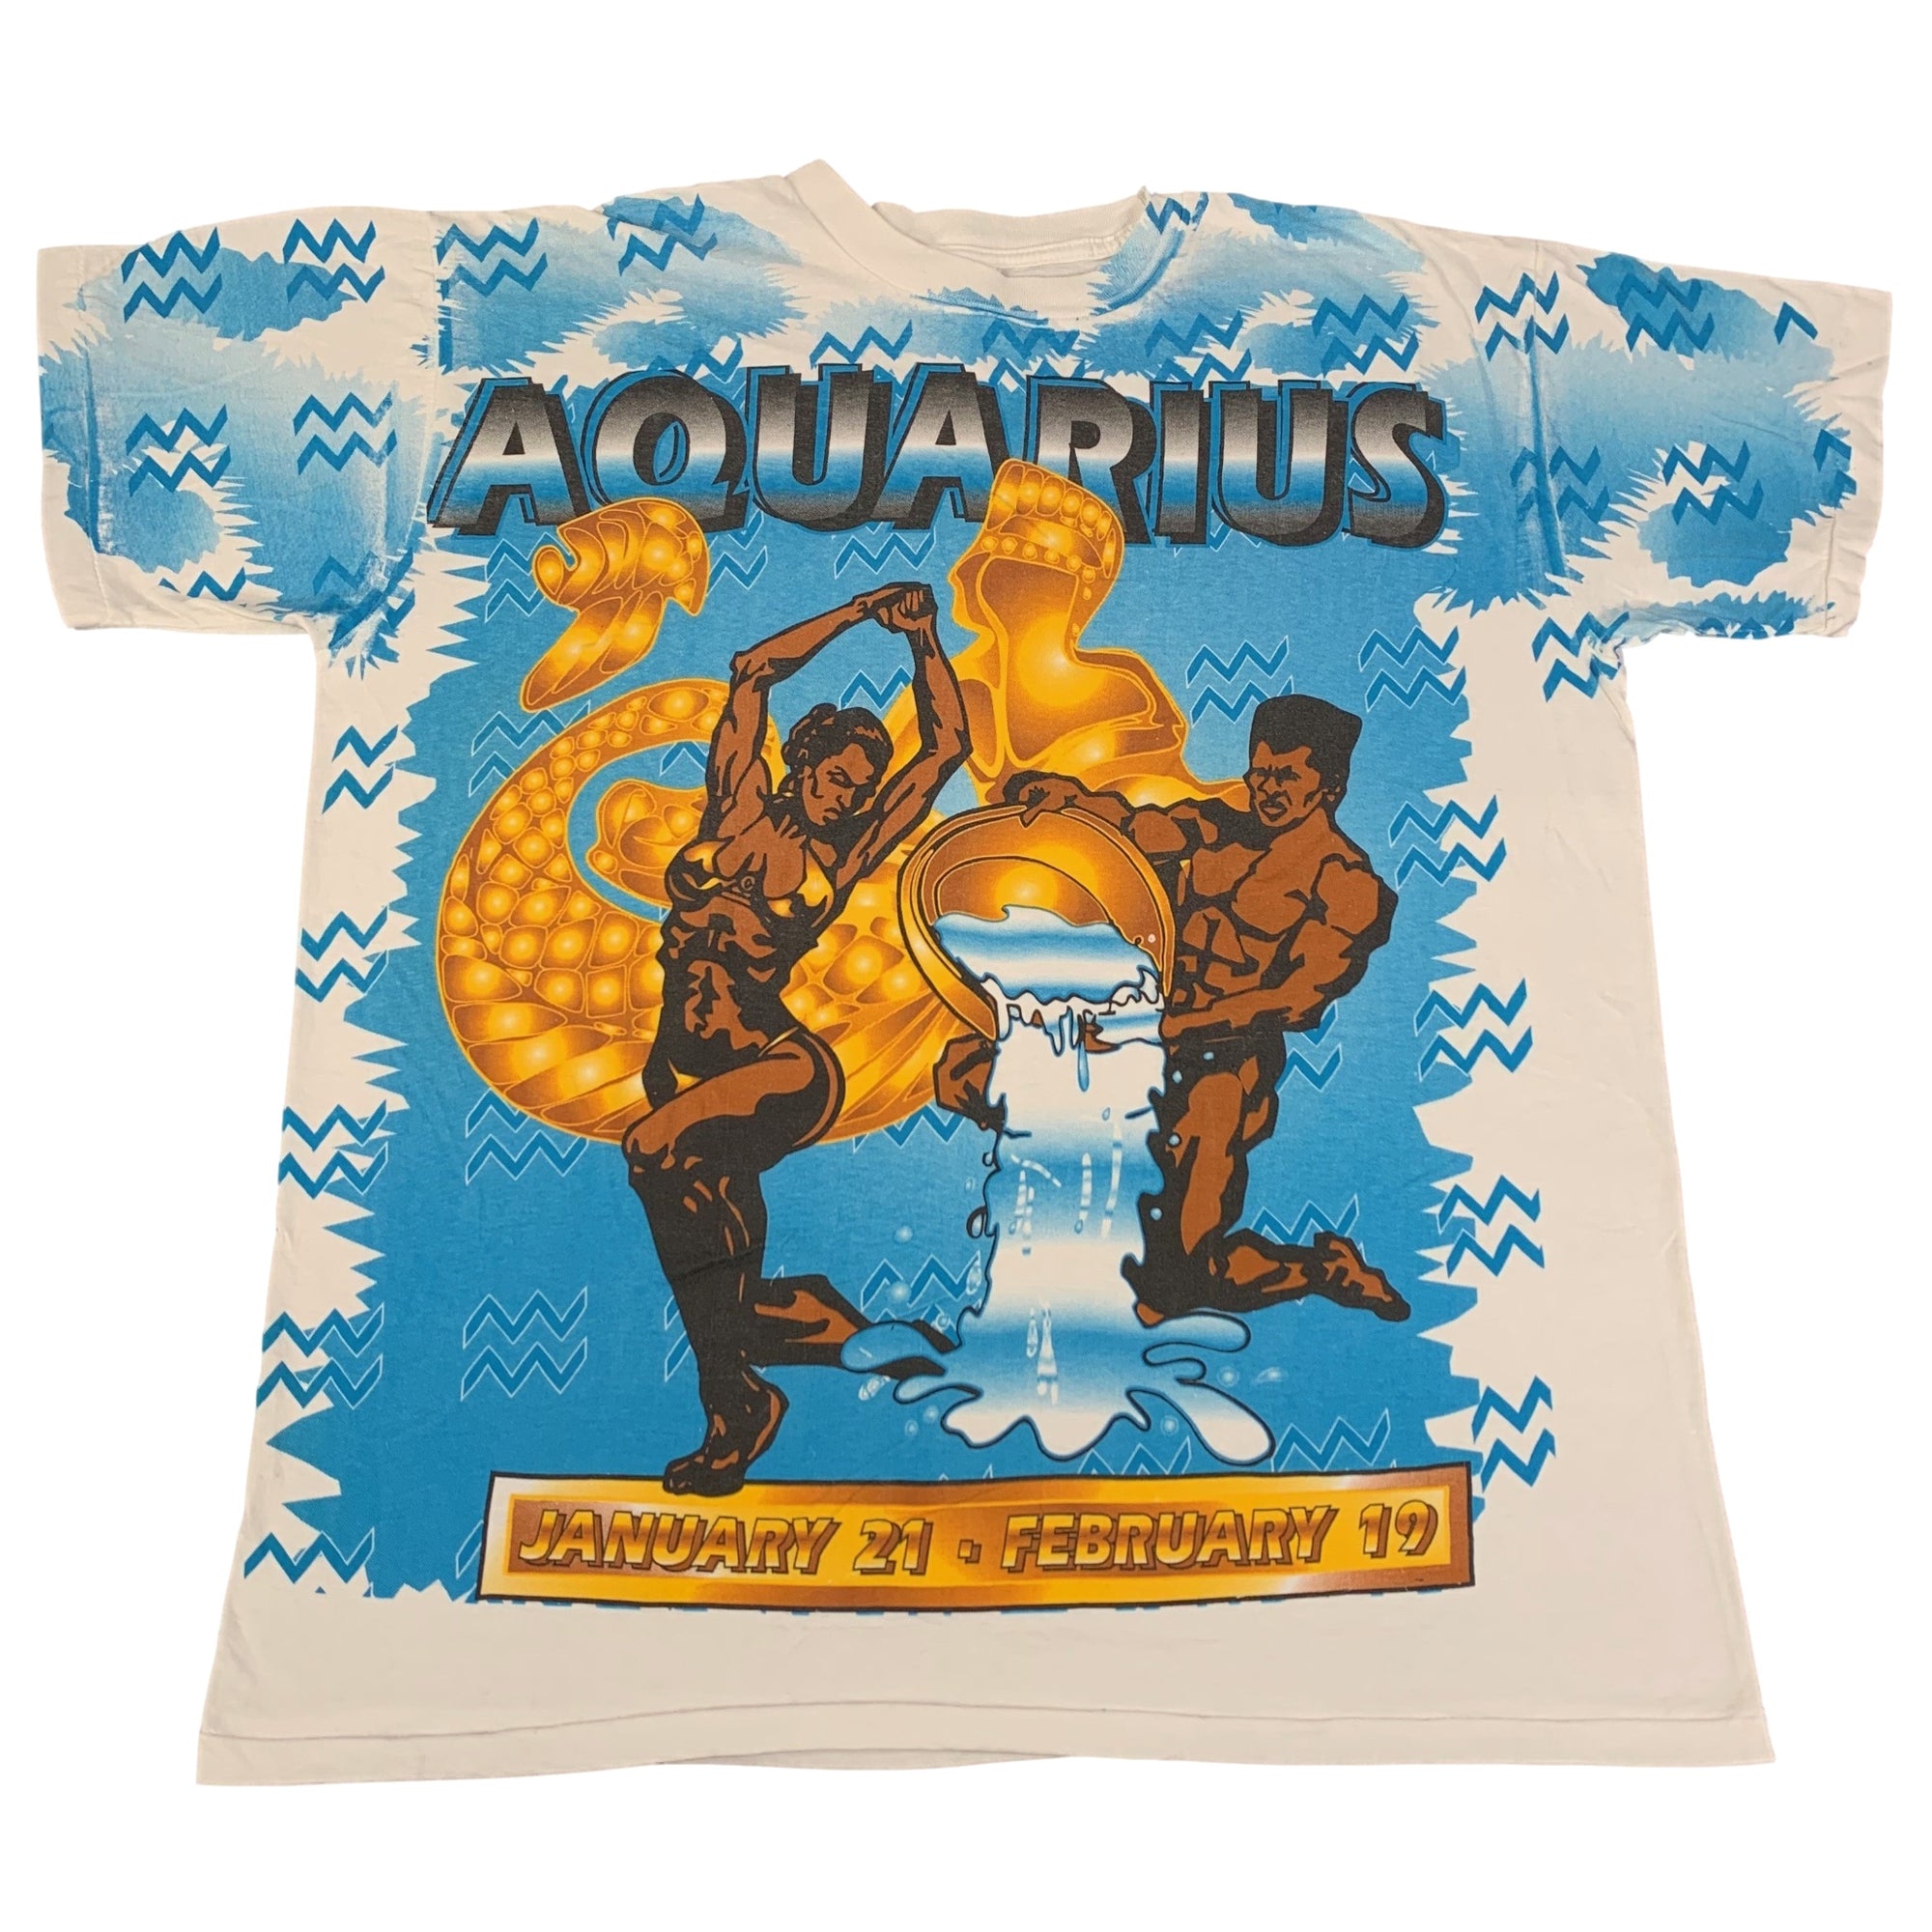 Vintage Aquarius "January 21-February 19" T-Shirt - jointcustodydc